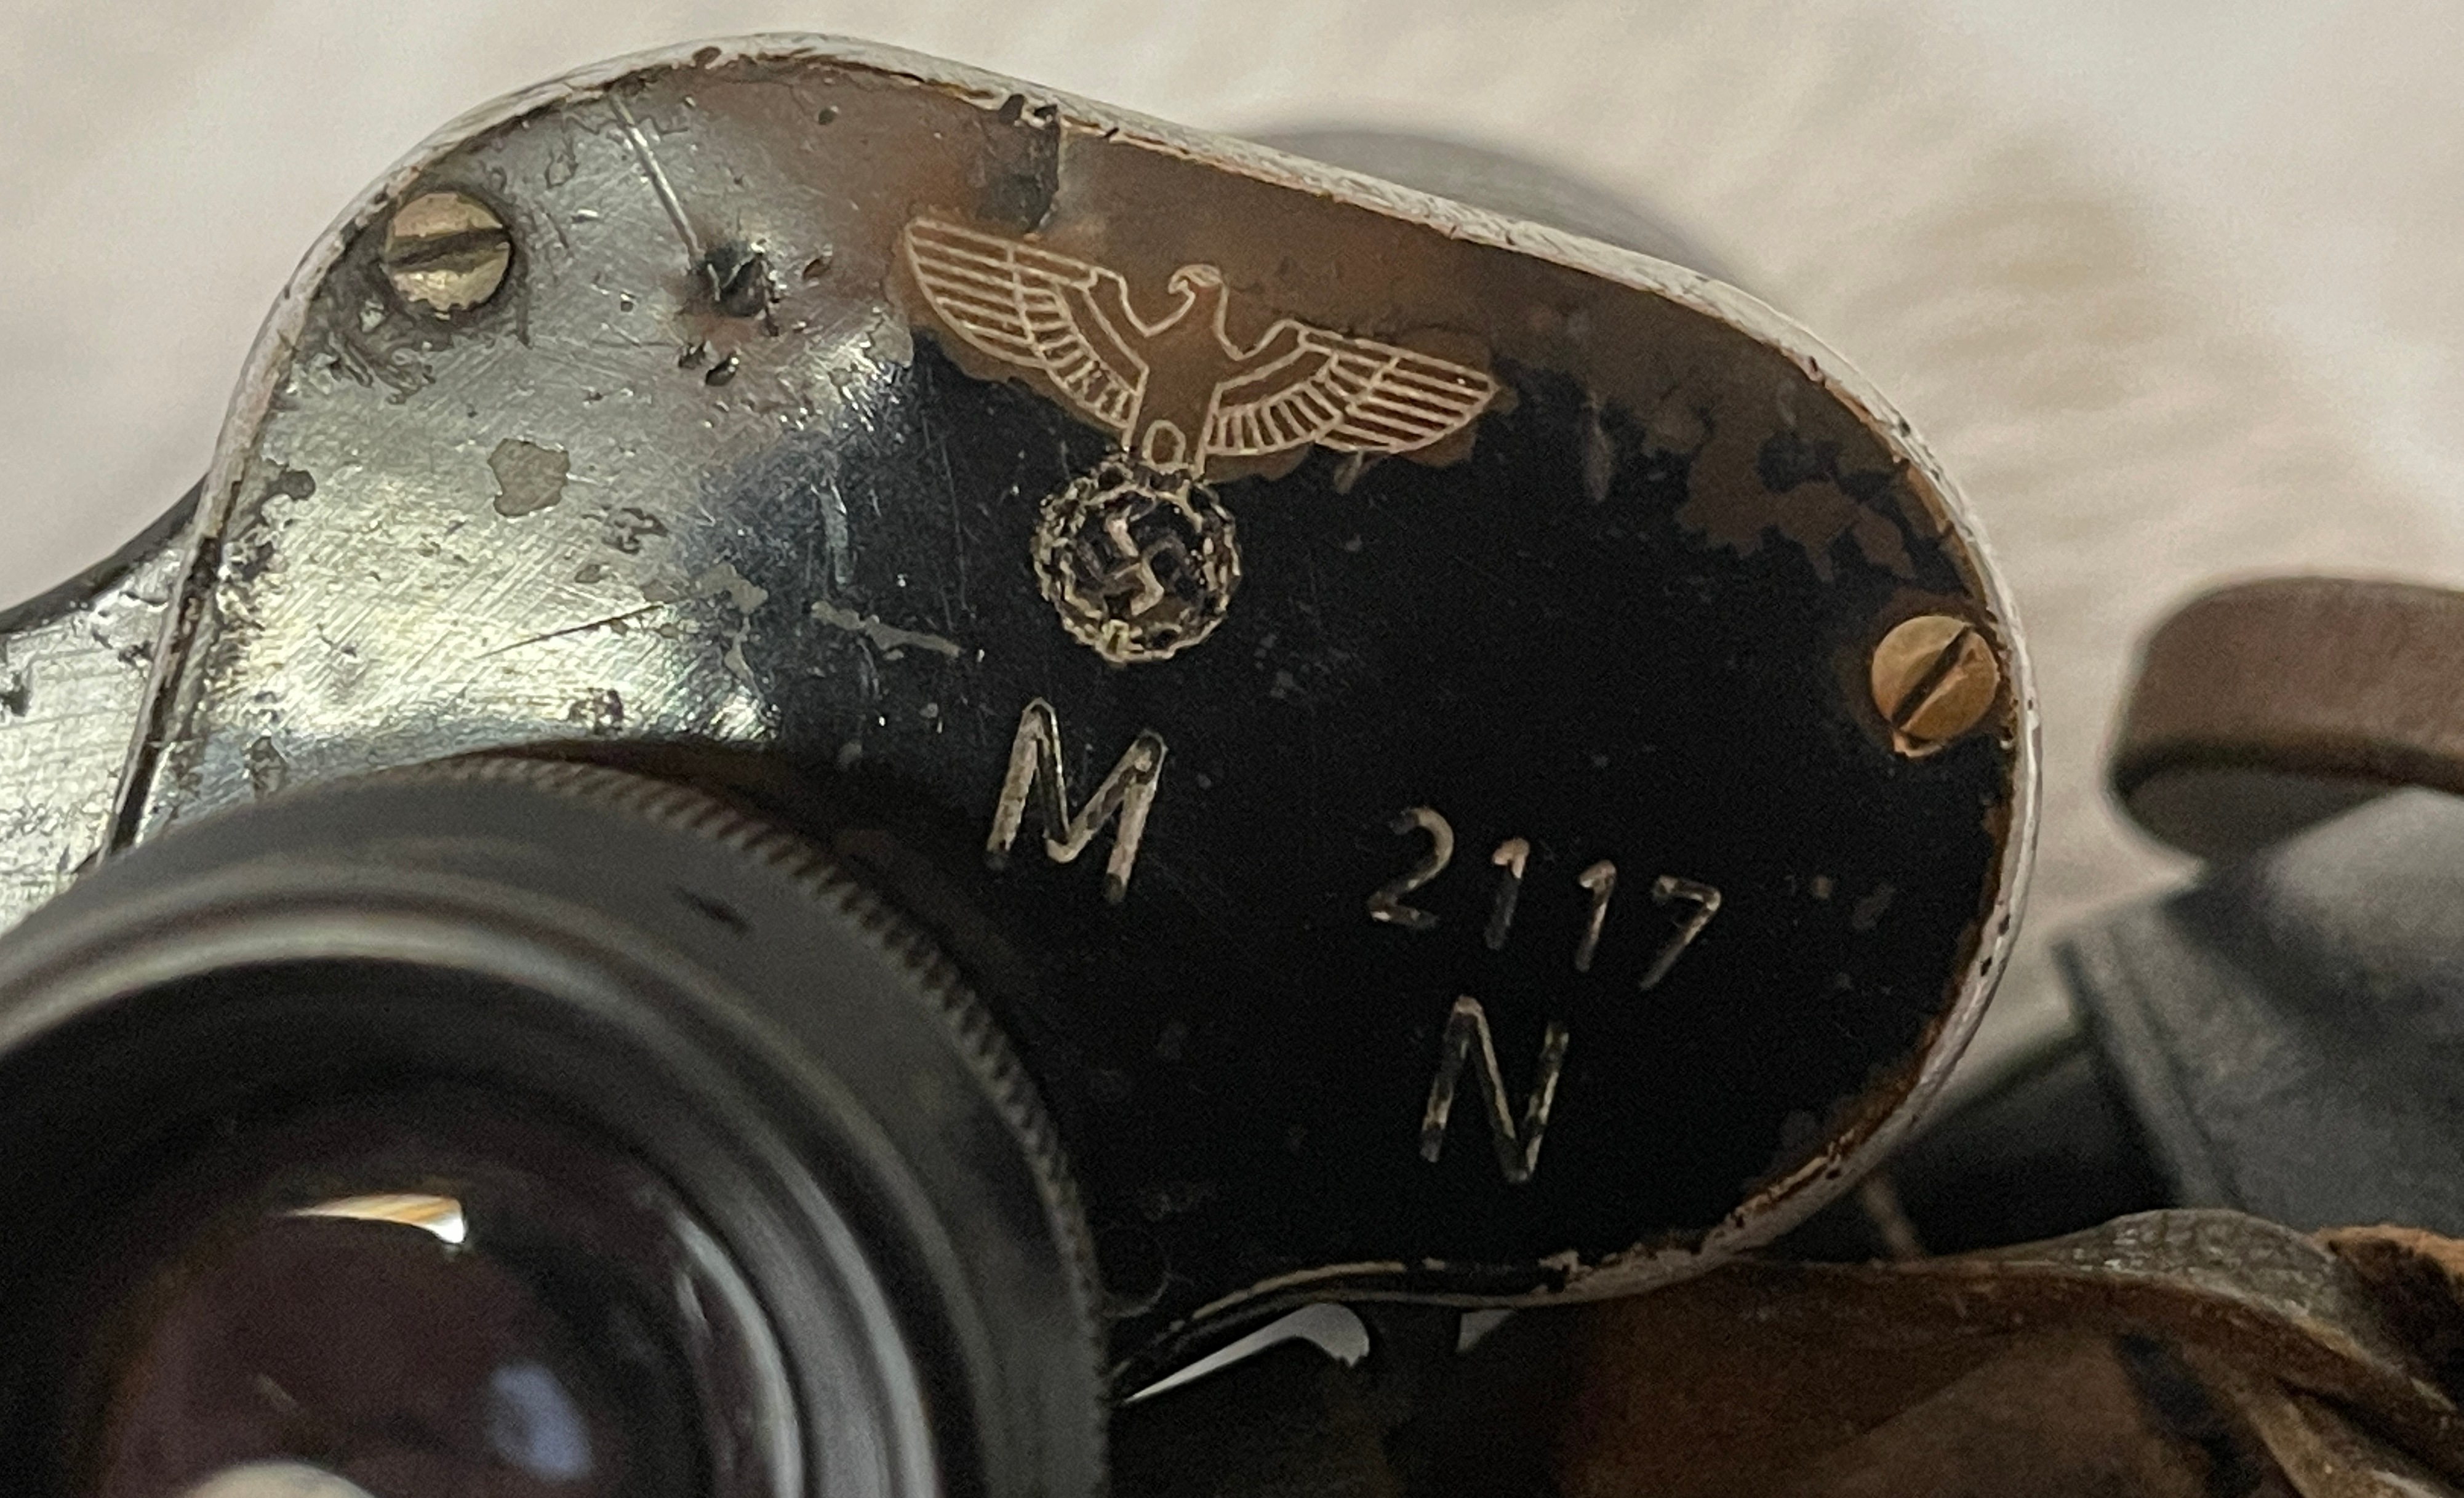 Pair of WW2 German Marine Binoculars 8 x 60 beh with Swastika mark. - Image 4 of 10